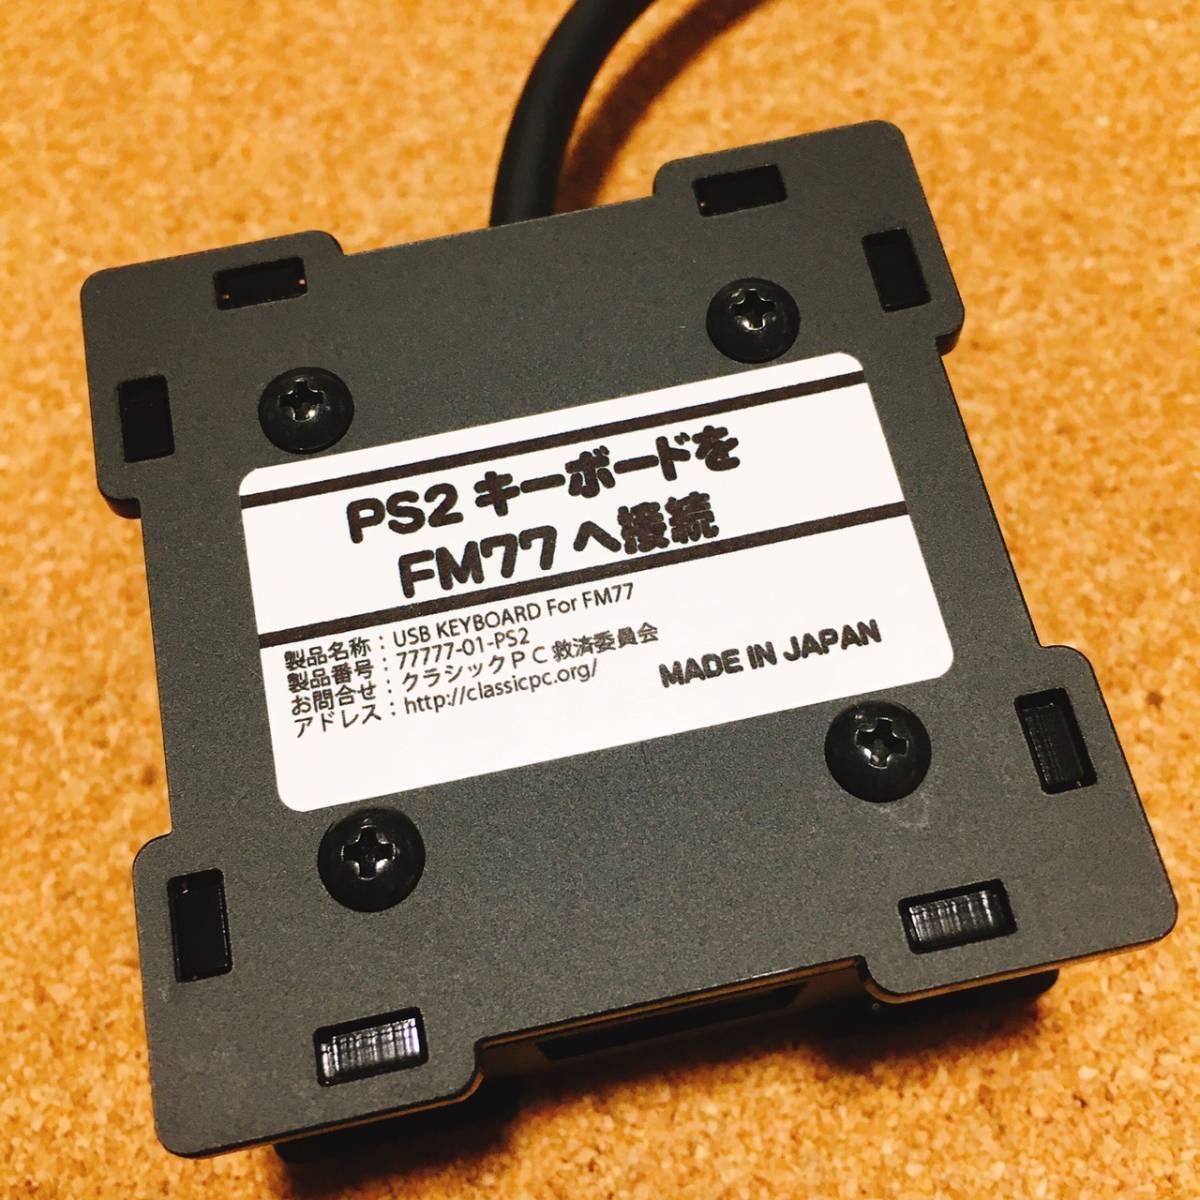 PS2 Keyboard Covert Adapter for Fujitsu FM77AV Series Personal Computer